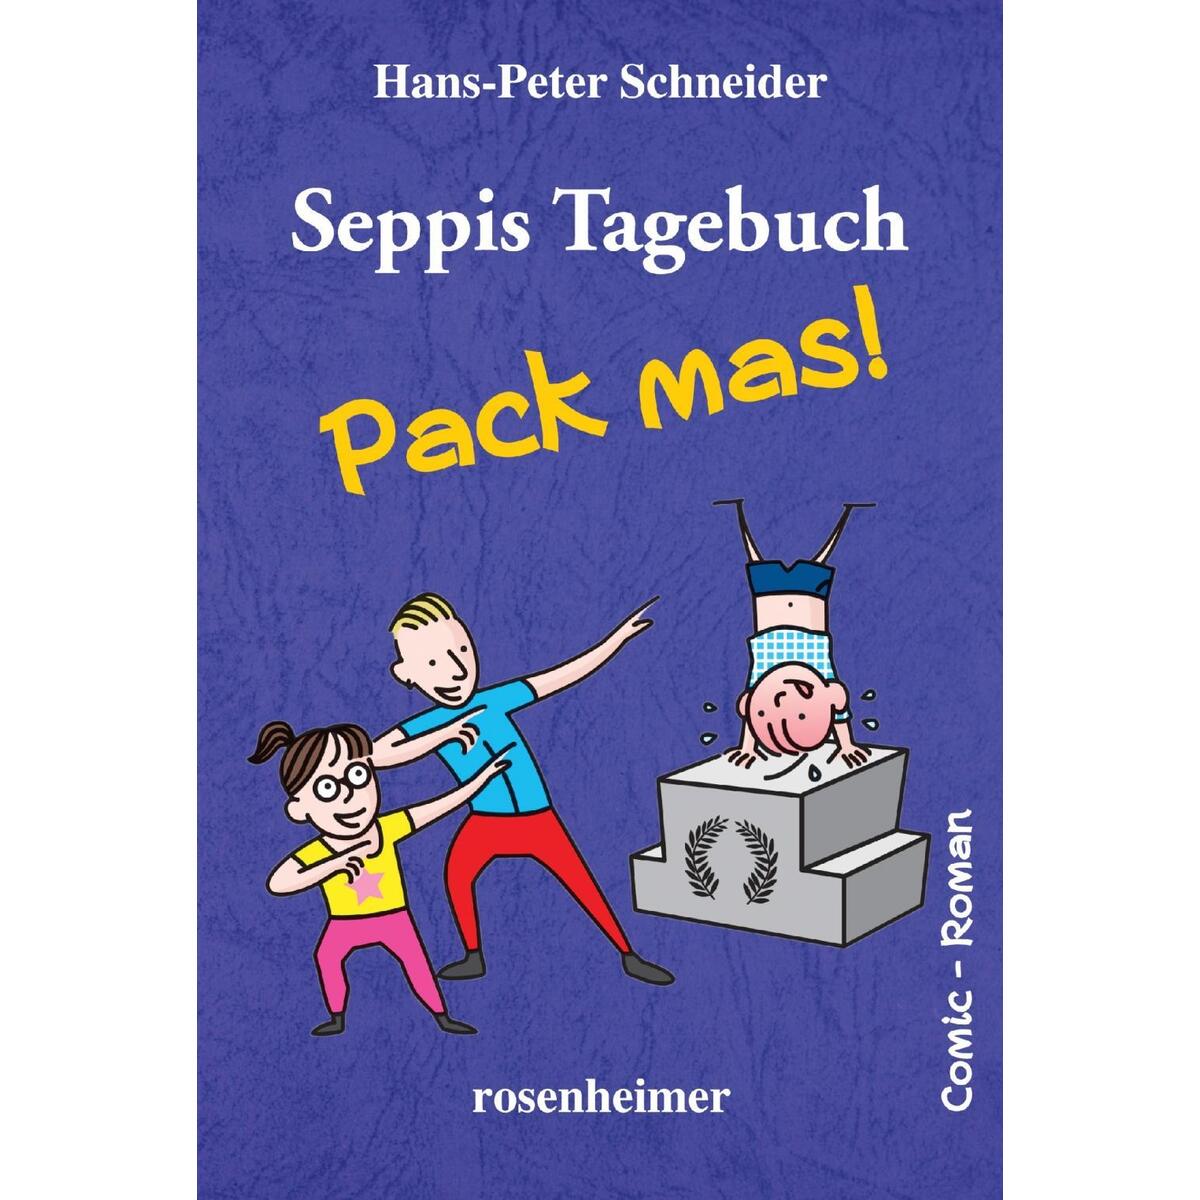 Seppis Tagebuch - Pack mas! von Rosenheimer Verlagshaus